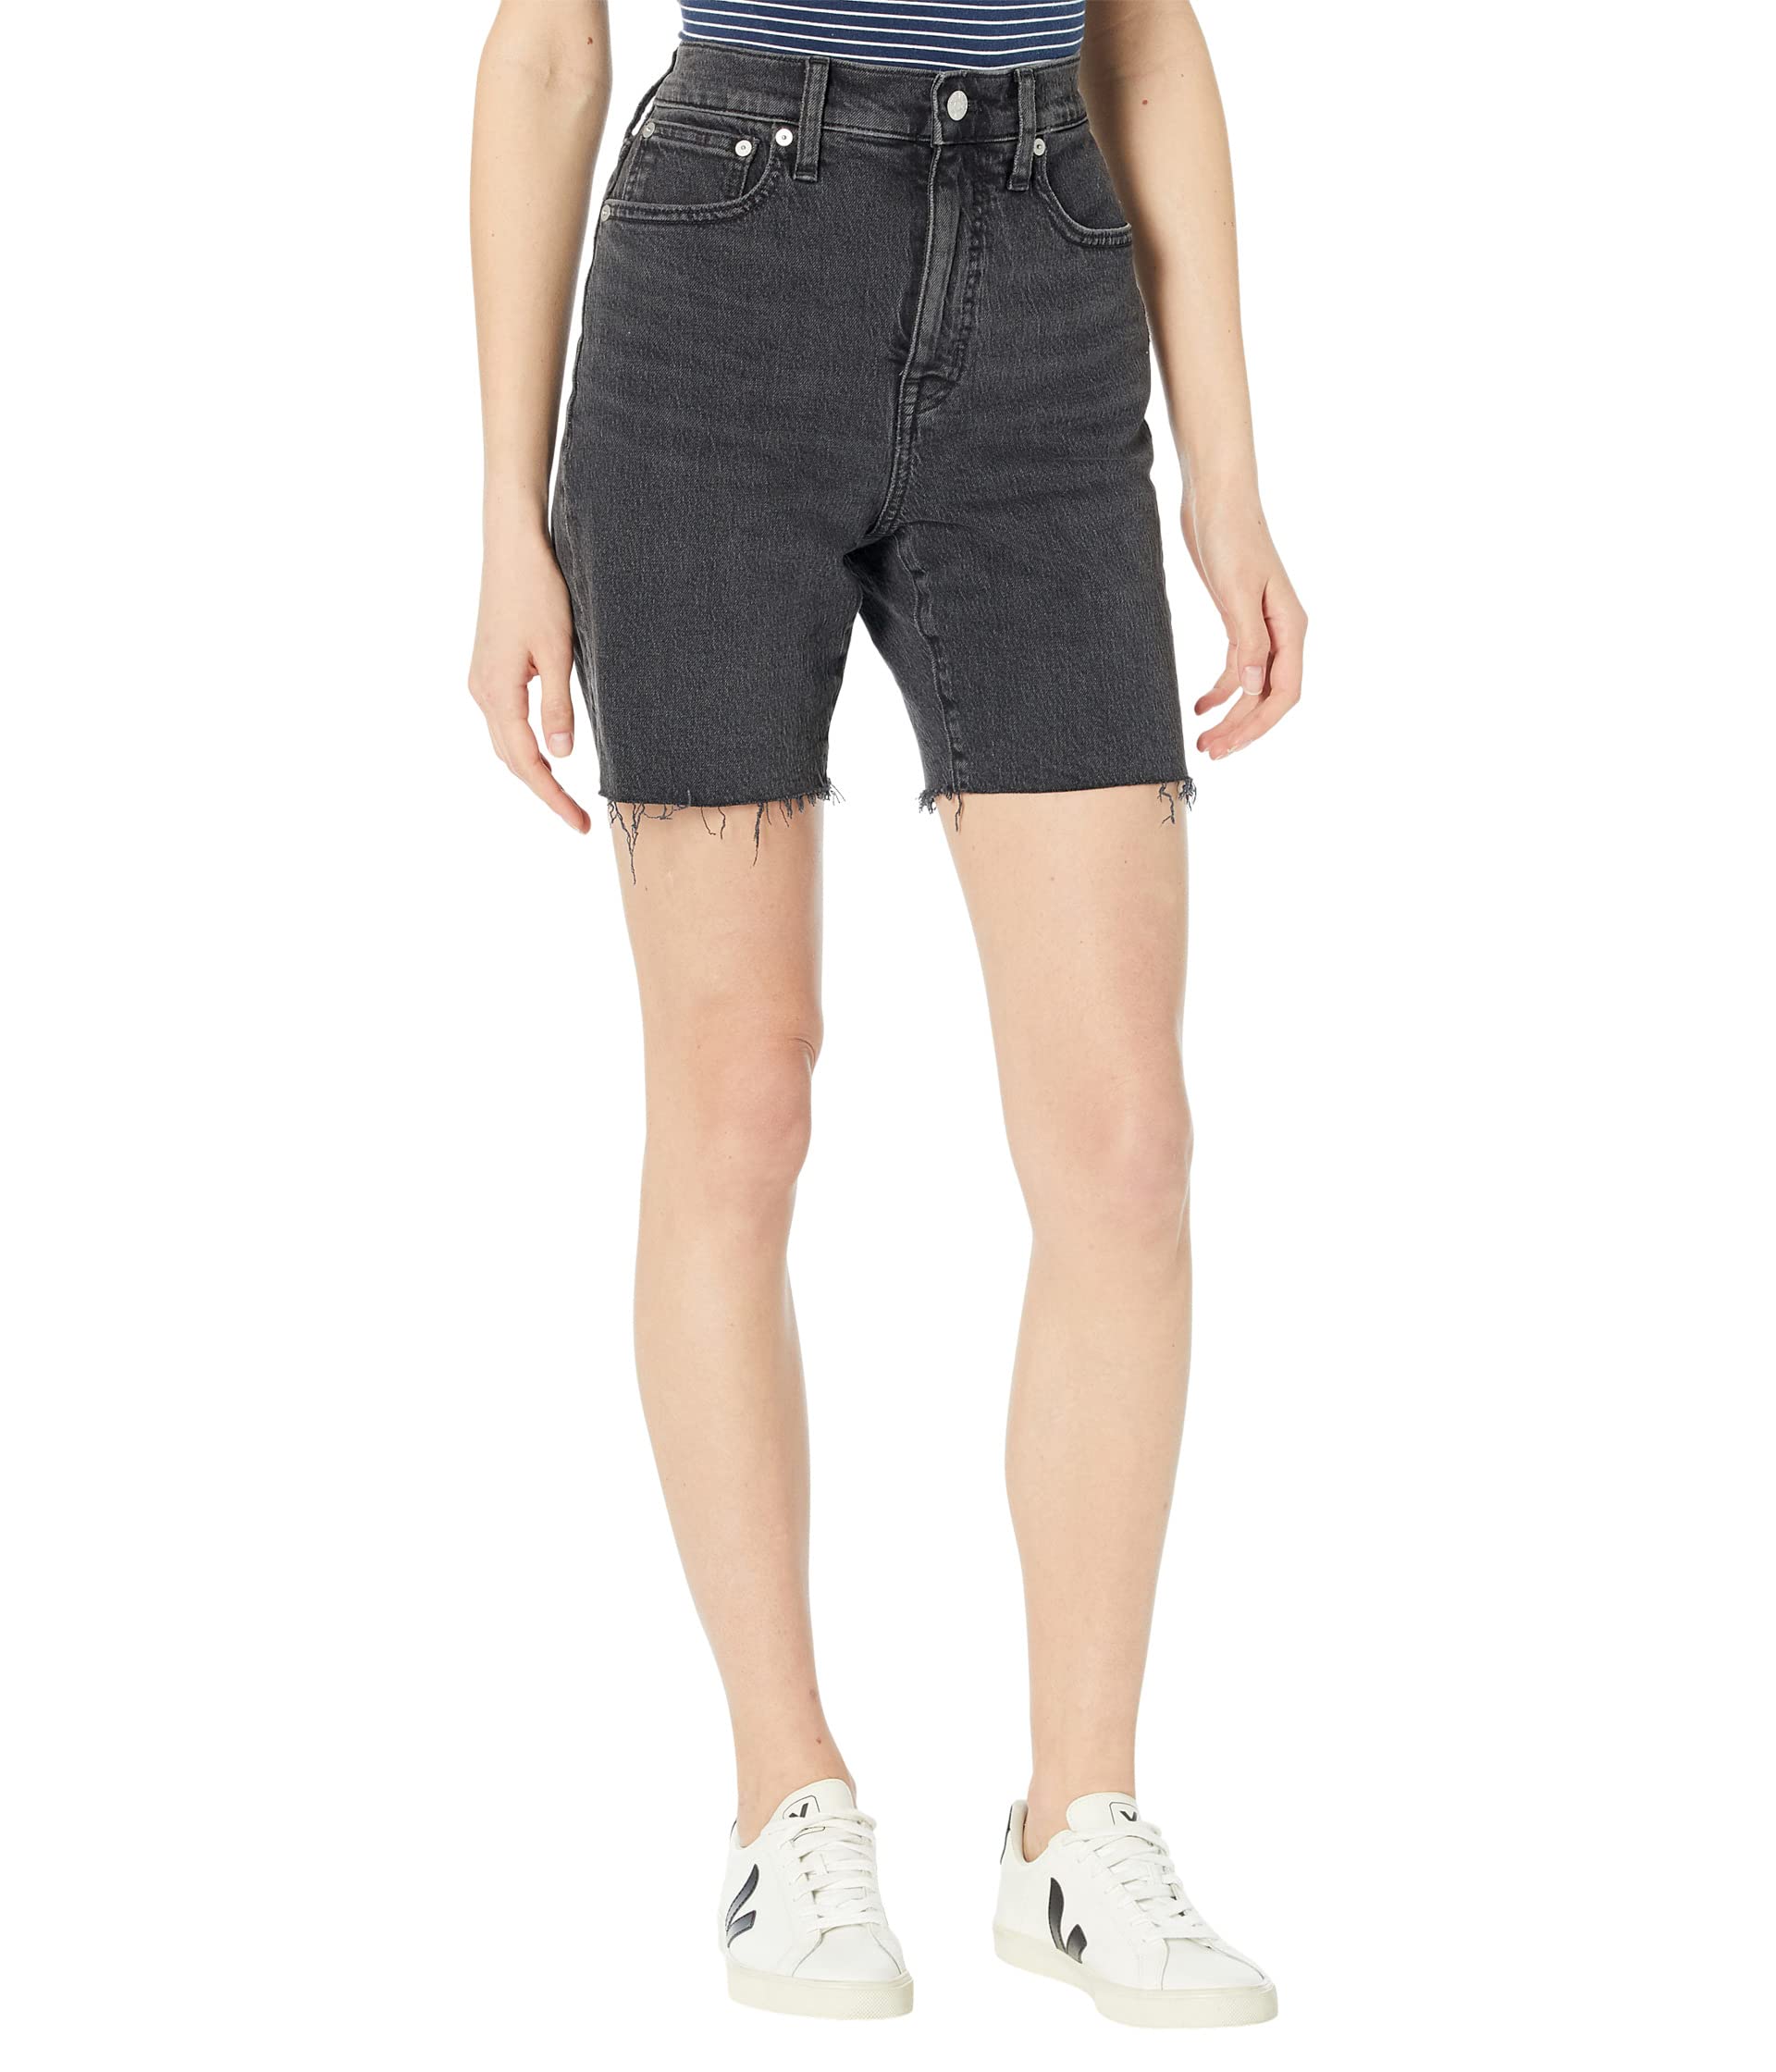 Шорты Madewell, High-Rise Mid-Length Denim Shorts in Claybrook Wash шорты madewell relaxed denim shorts in haywood wash